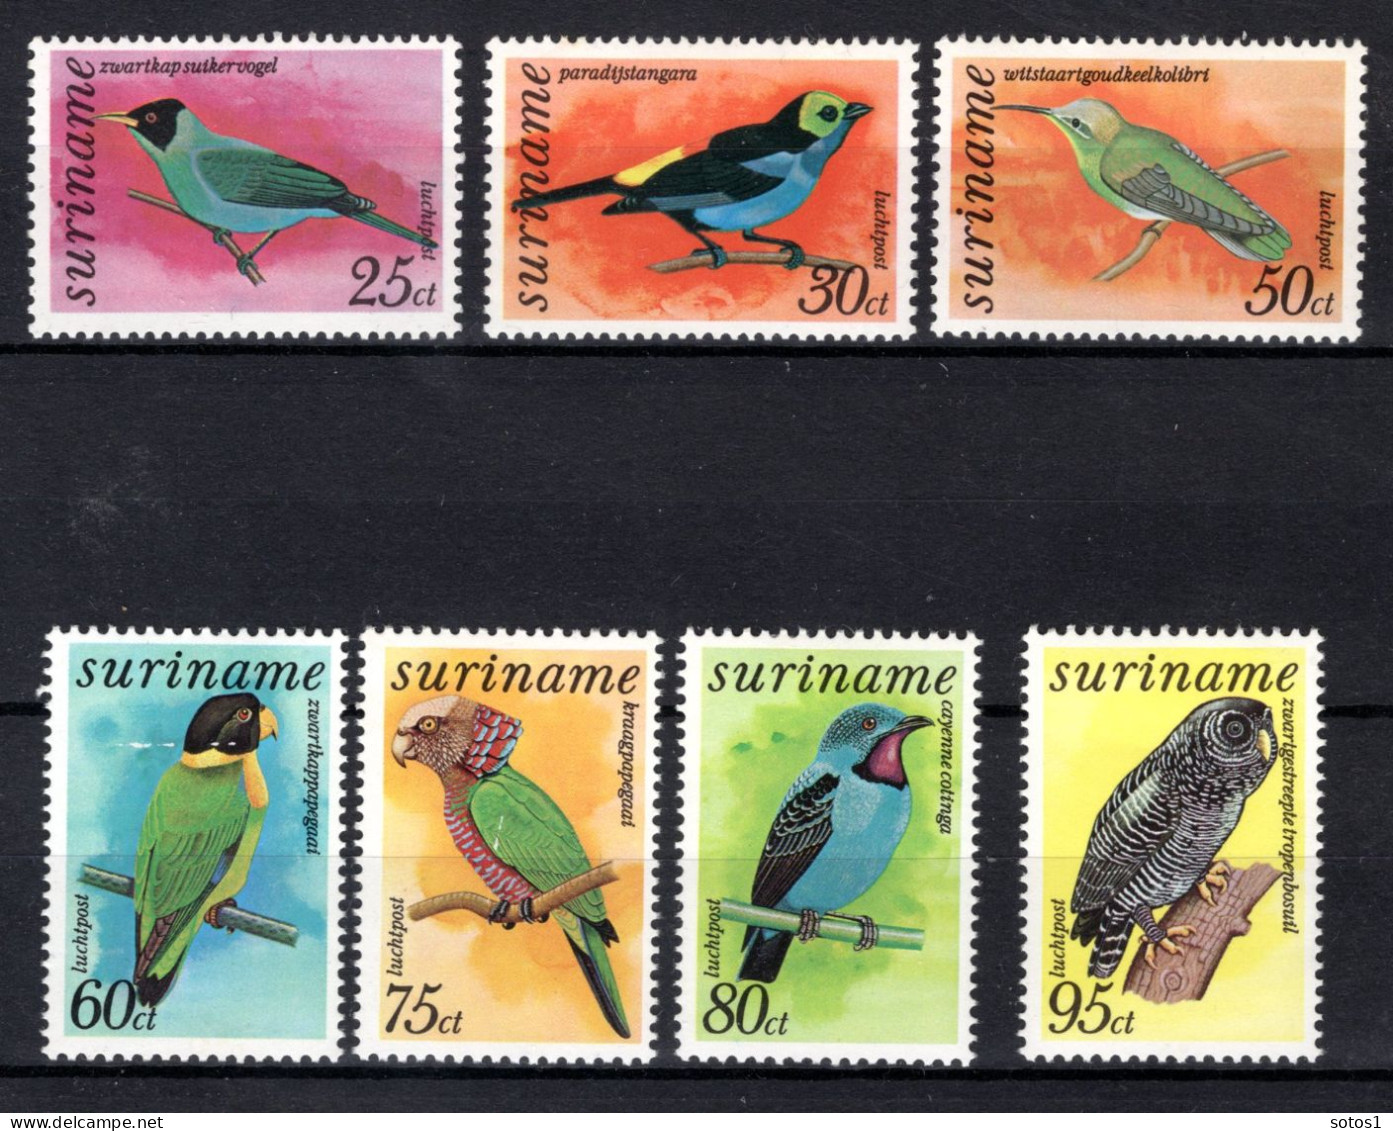 SURINAME 764/770 MH 1977 - Vogels - Suriname